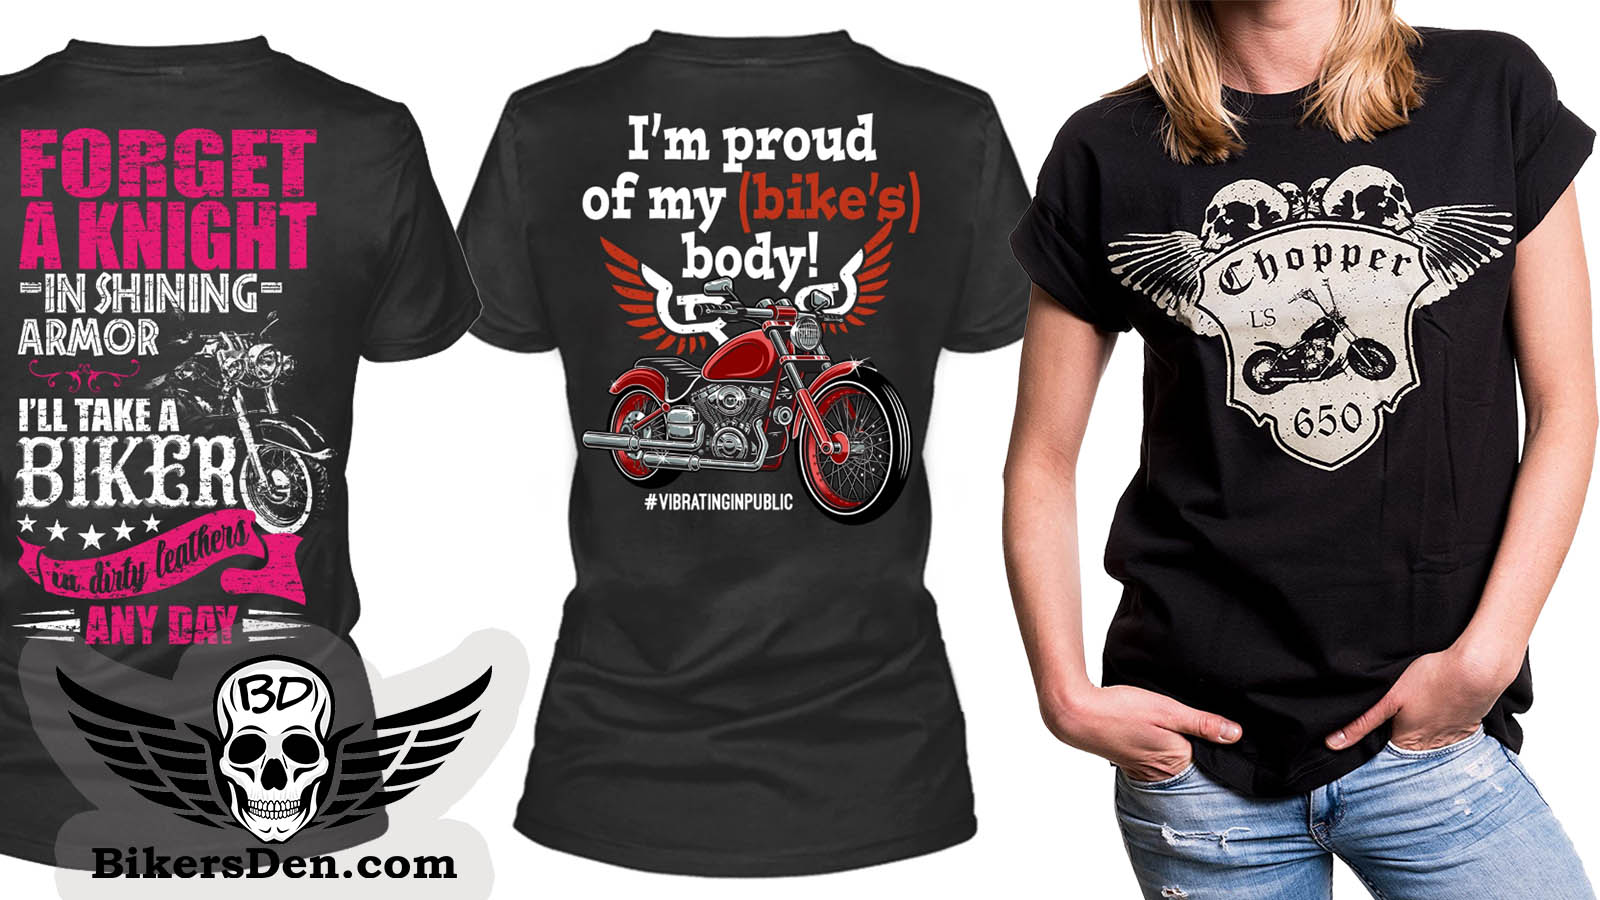 Women's Motorcycle & Biker T-Shirts - The Den